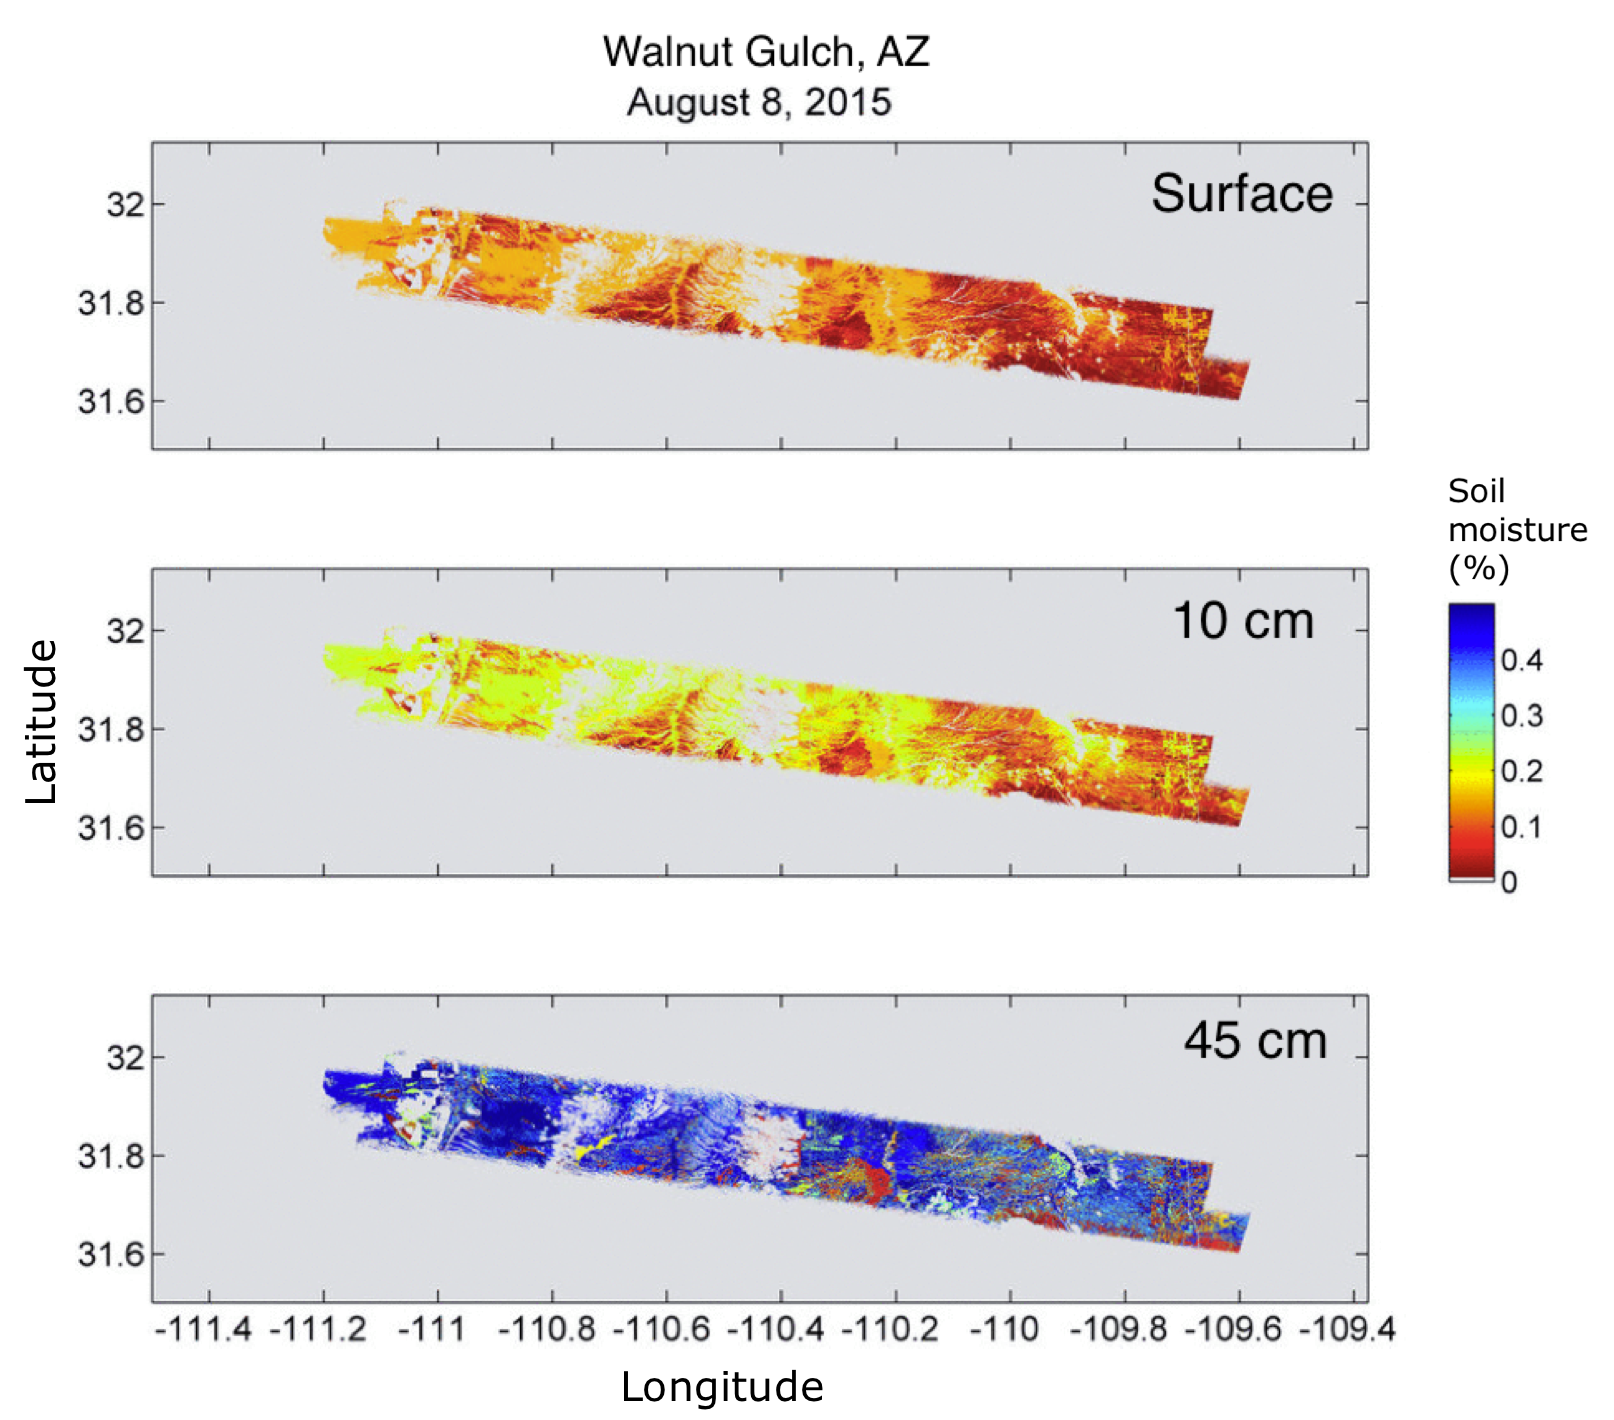 Soil moisture estimates at the Walnut Gulch site, Arizona